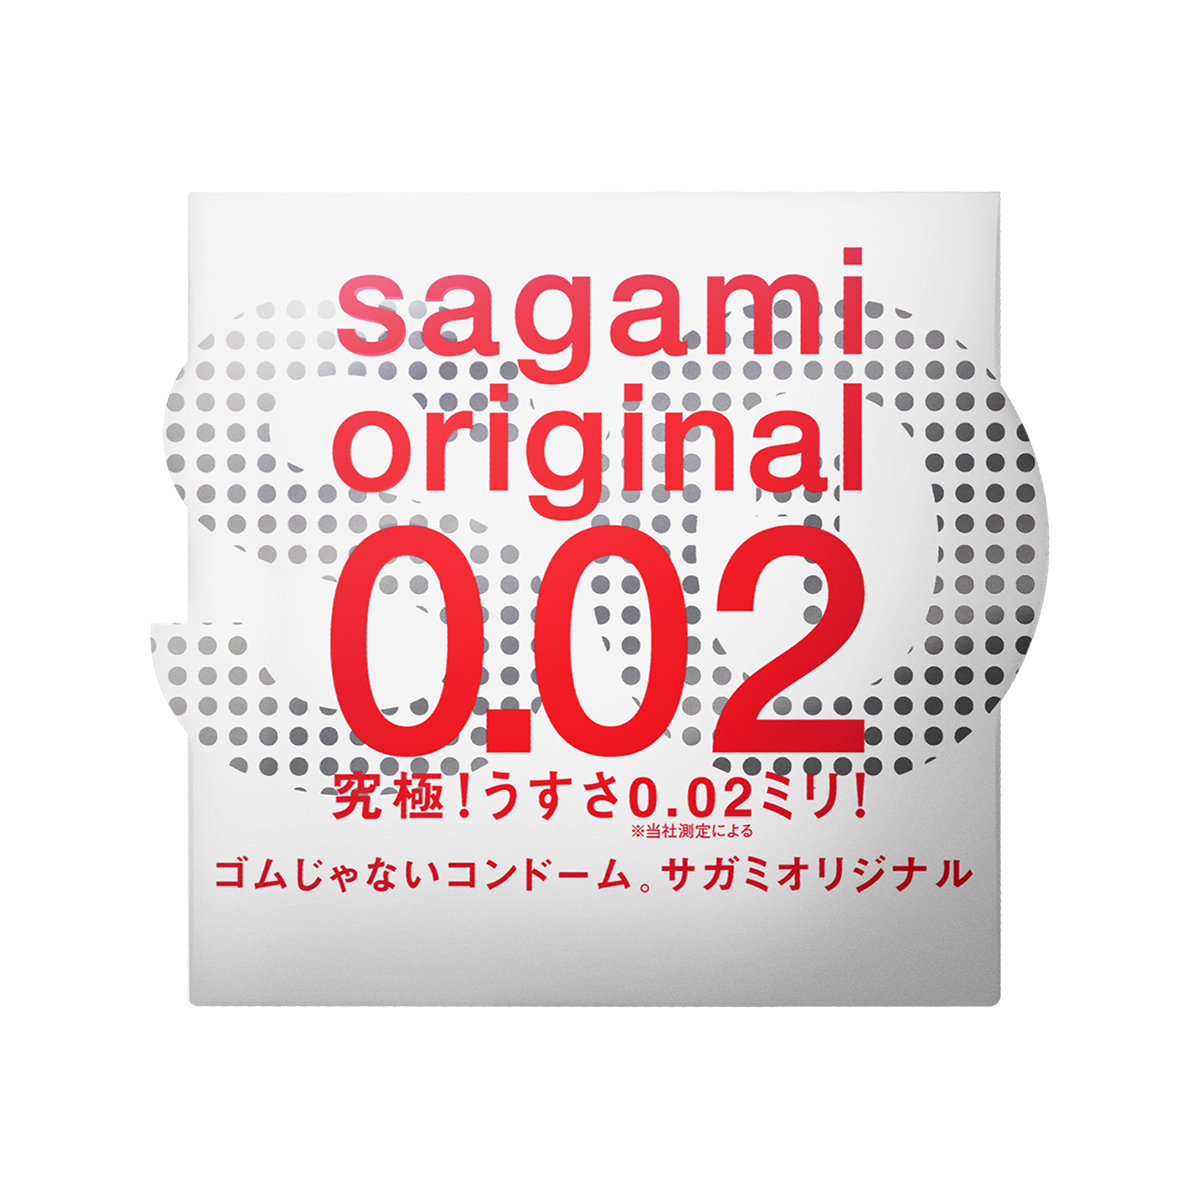 Sagami Original 0.02 (2nd generation) 1's Pack PU Condom-p_2